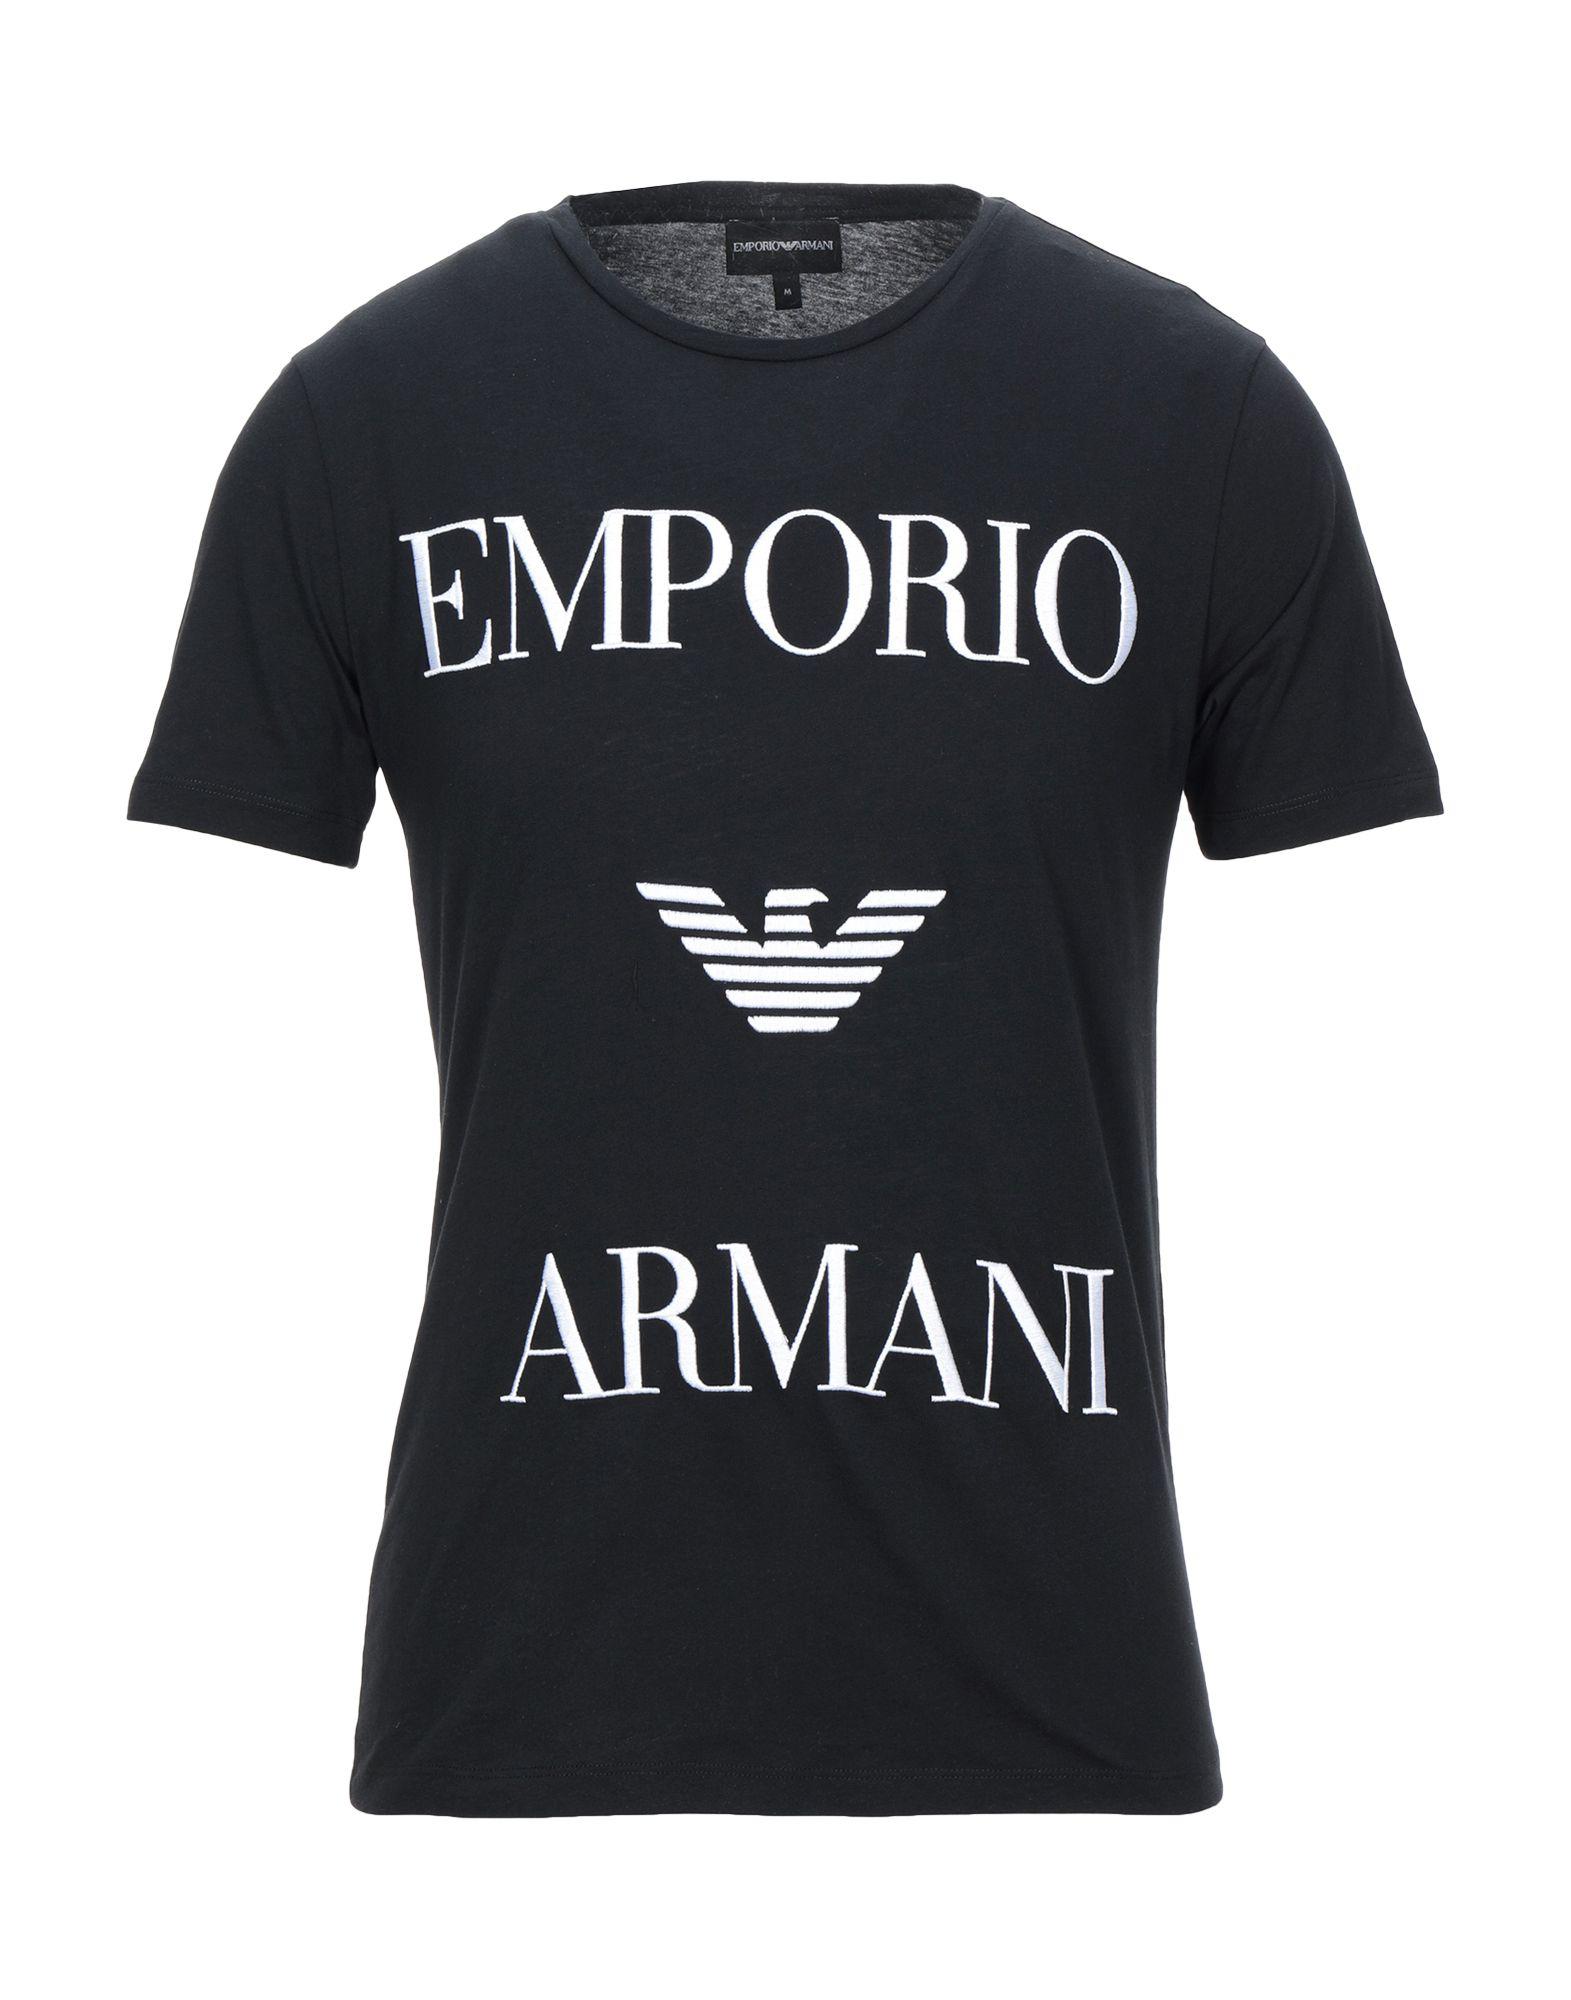 Emporio Armani T-shirt in Black for Men - Lyst